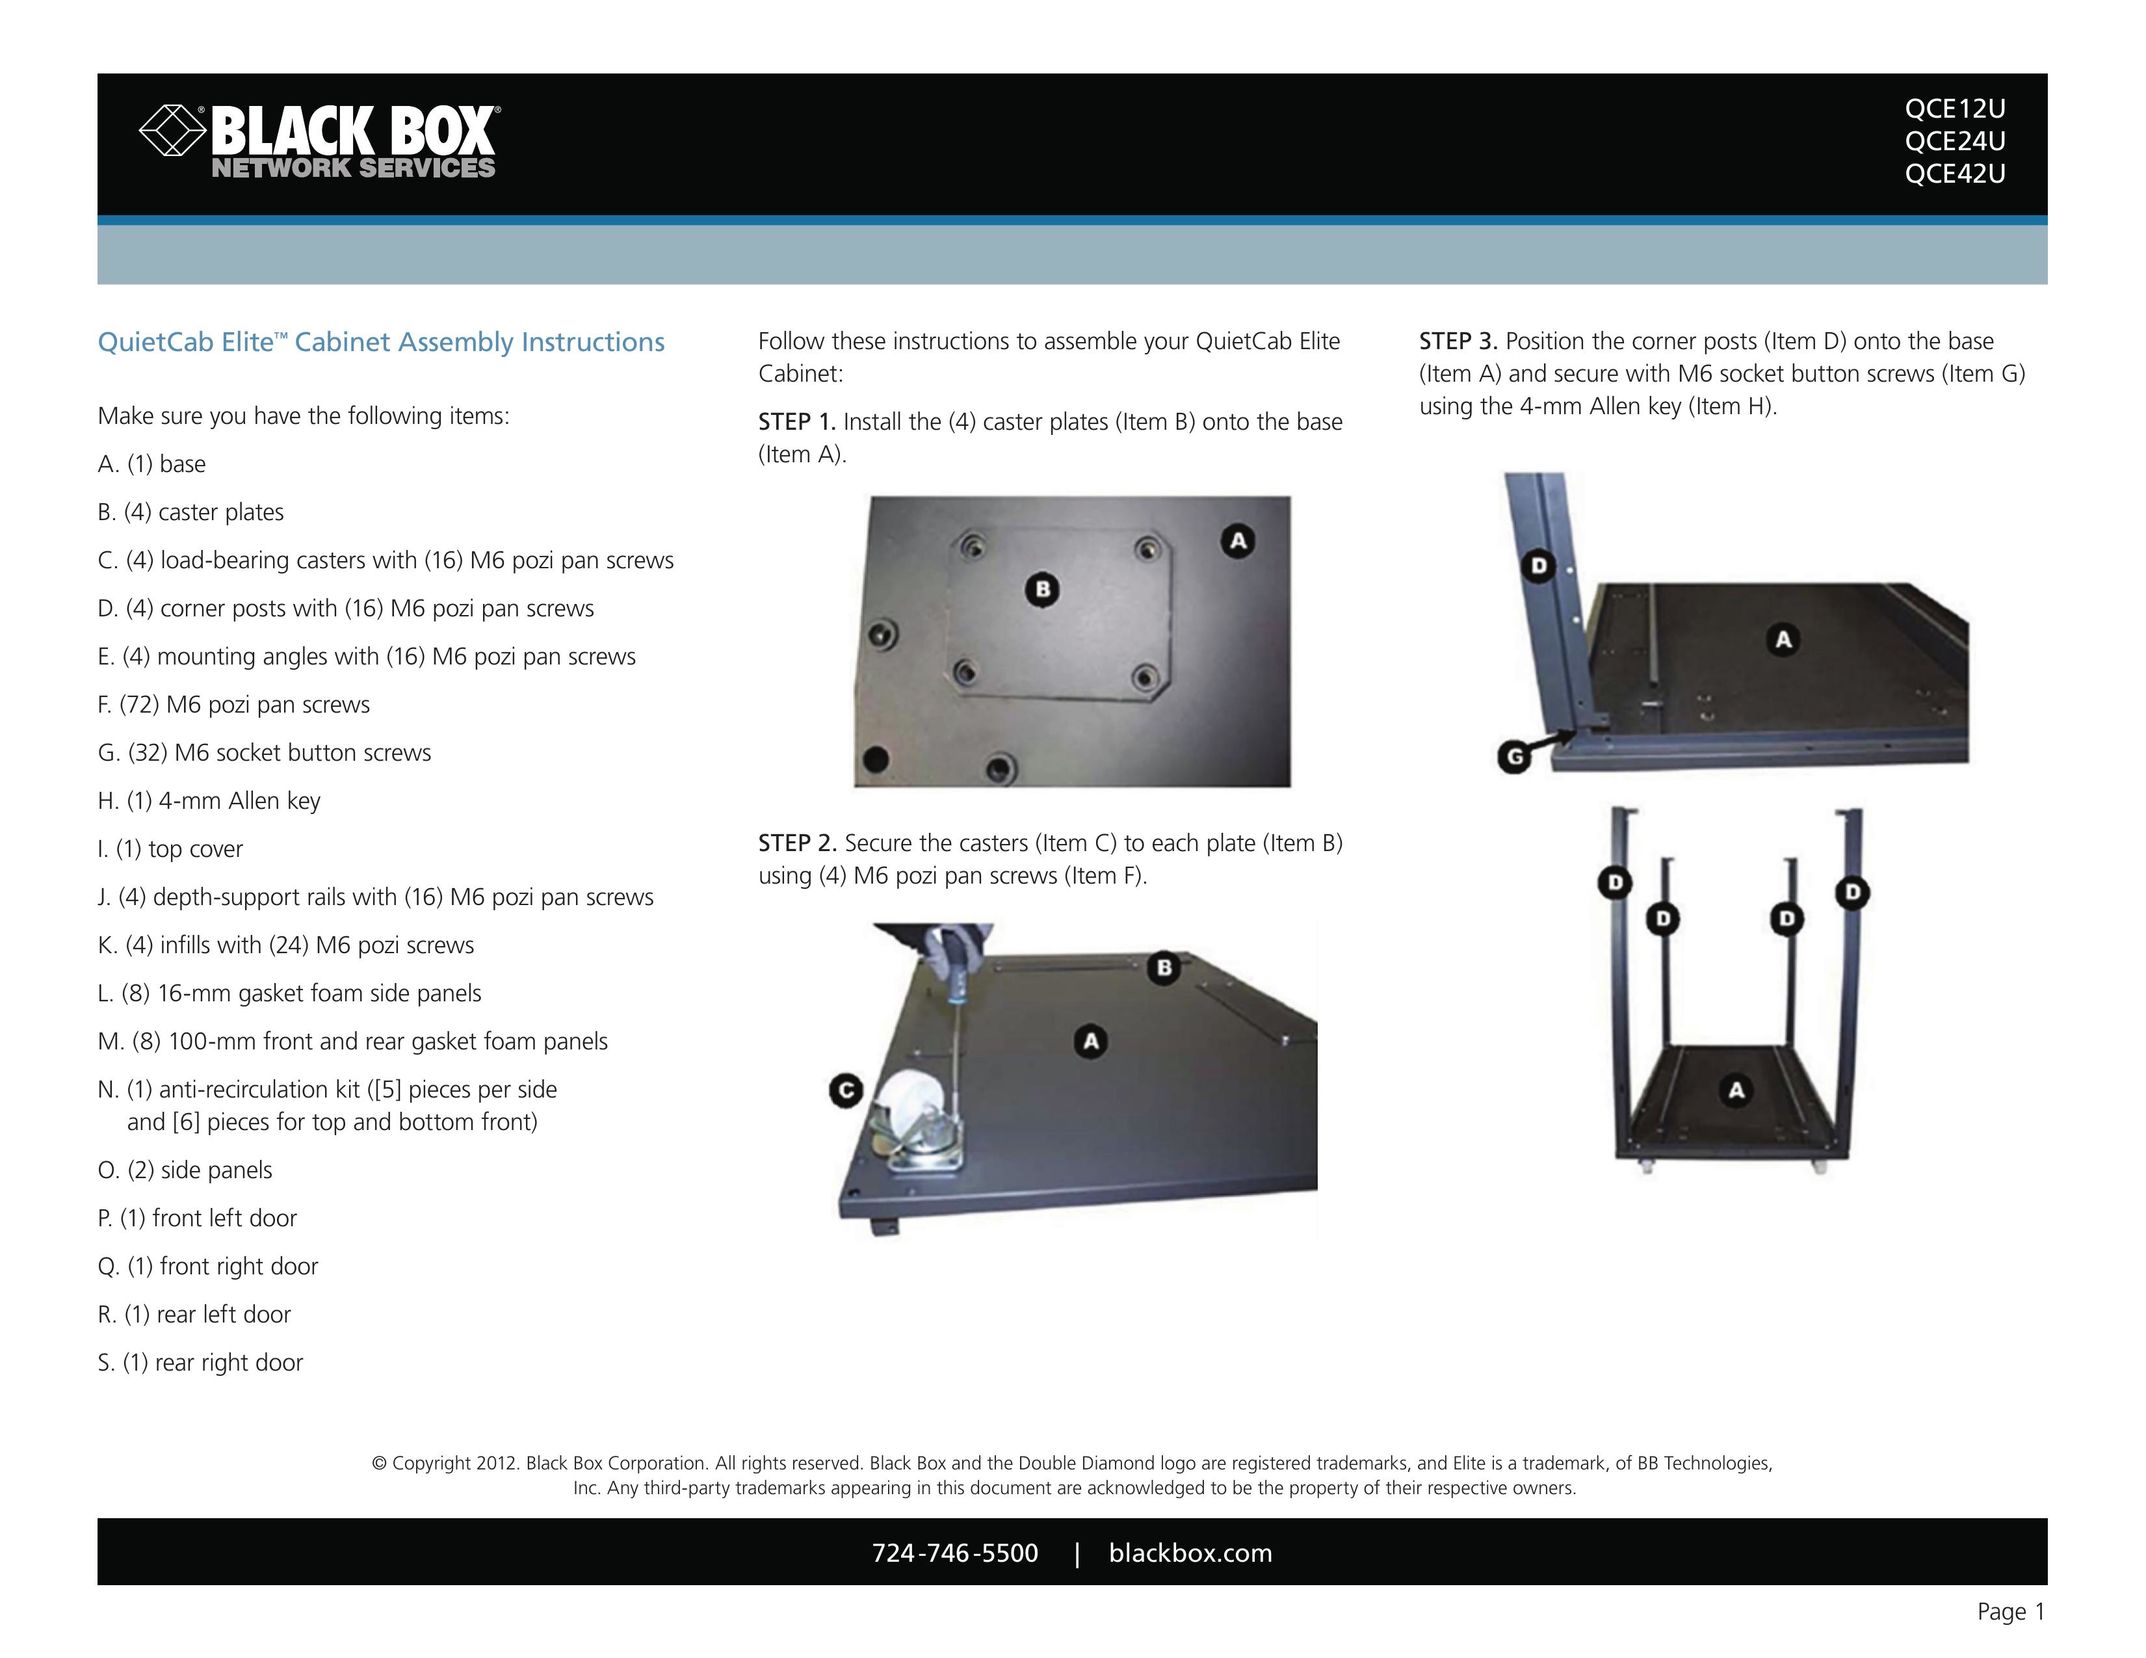 Black Box QCE12U Cable Box User Manual